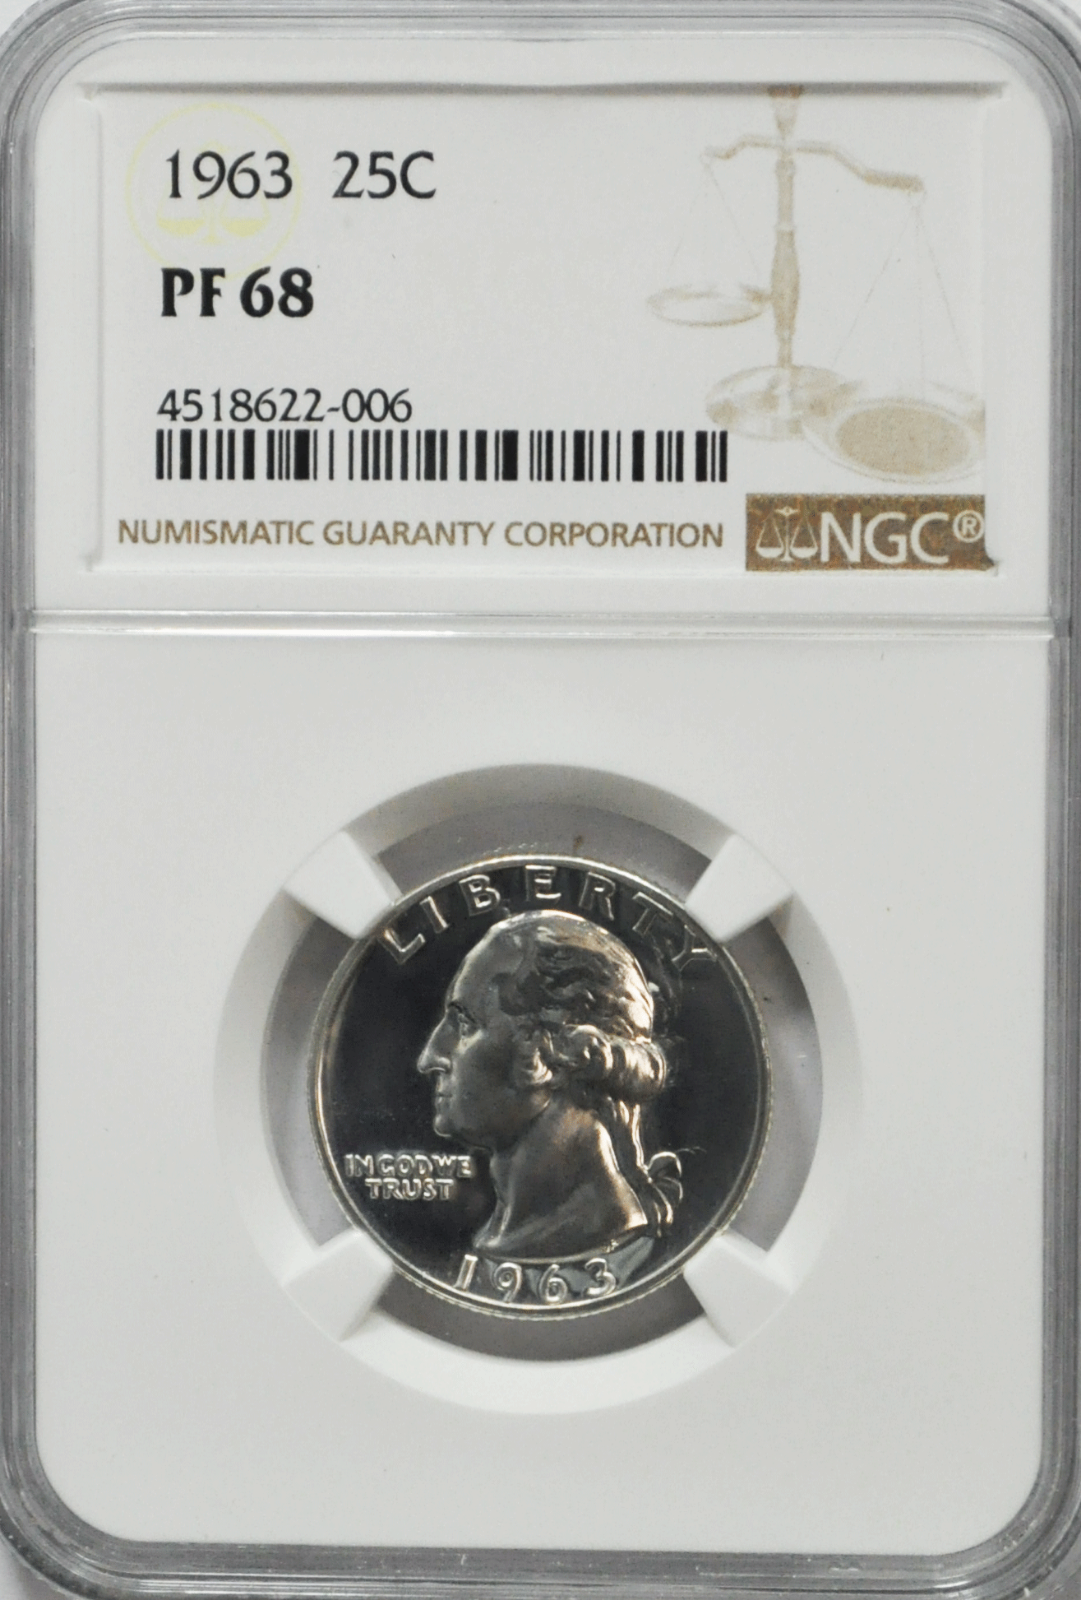 1963 25c Washington Proof Silver Quarter Dollar NGC PF68 Gem Uncirculated